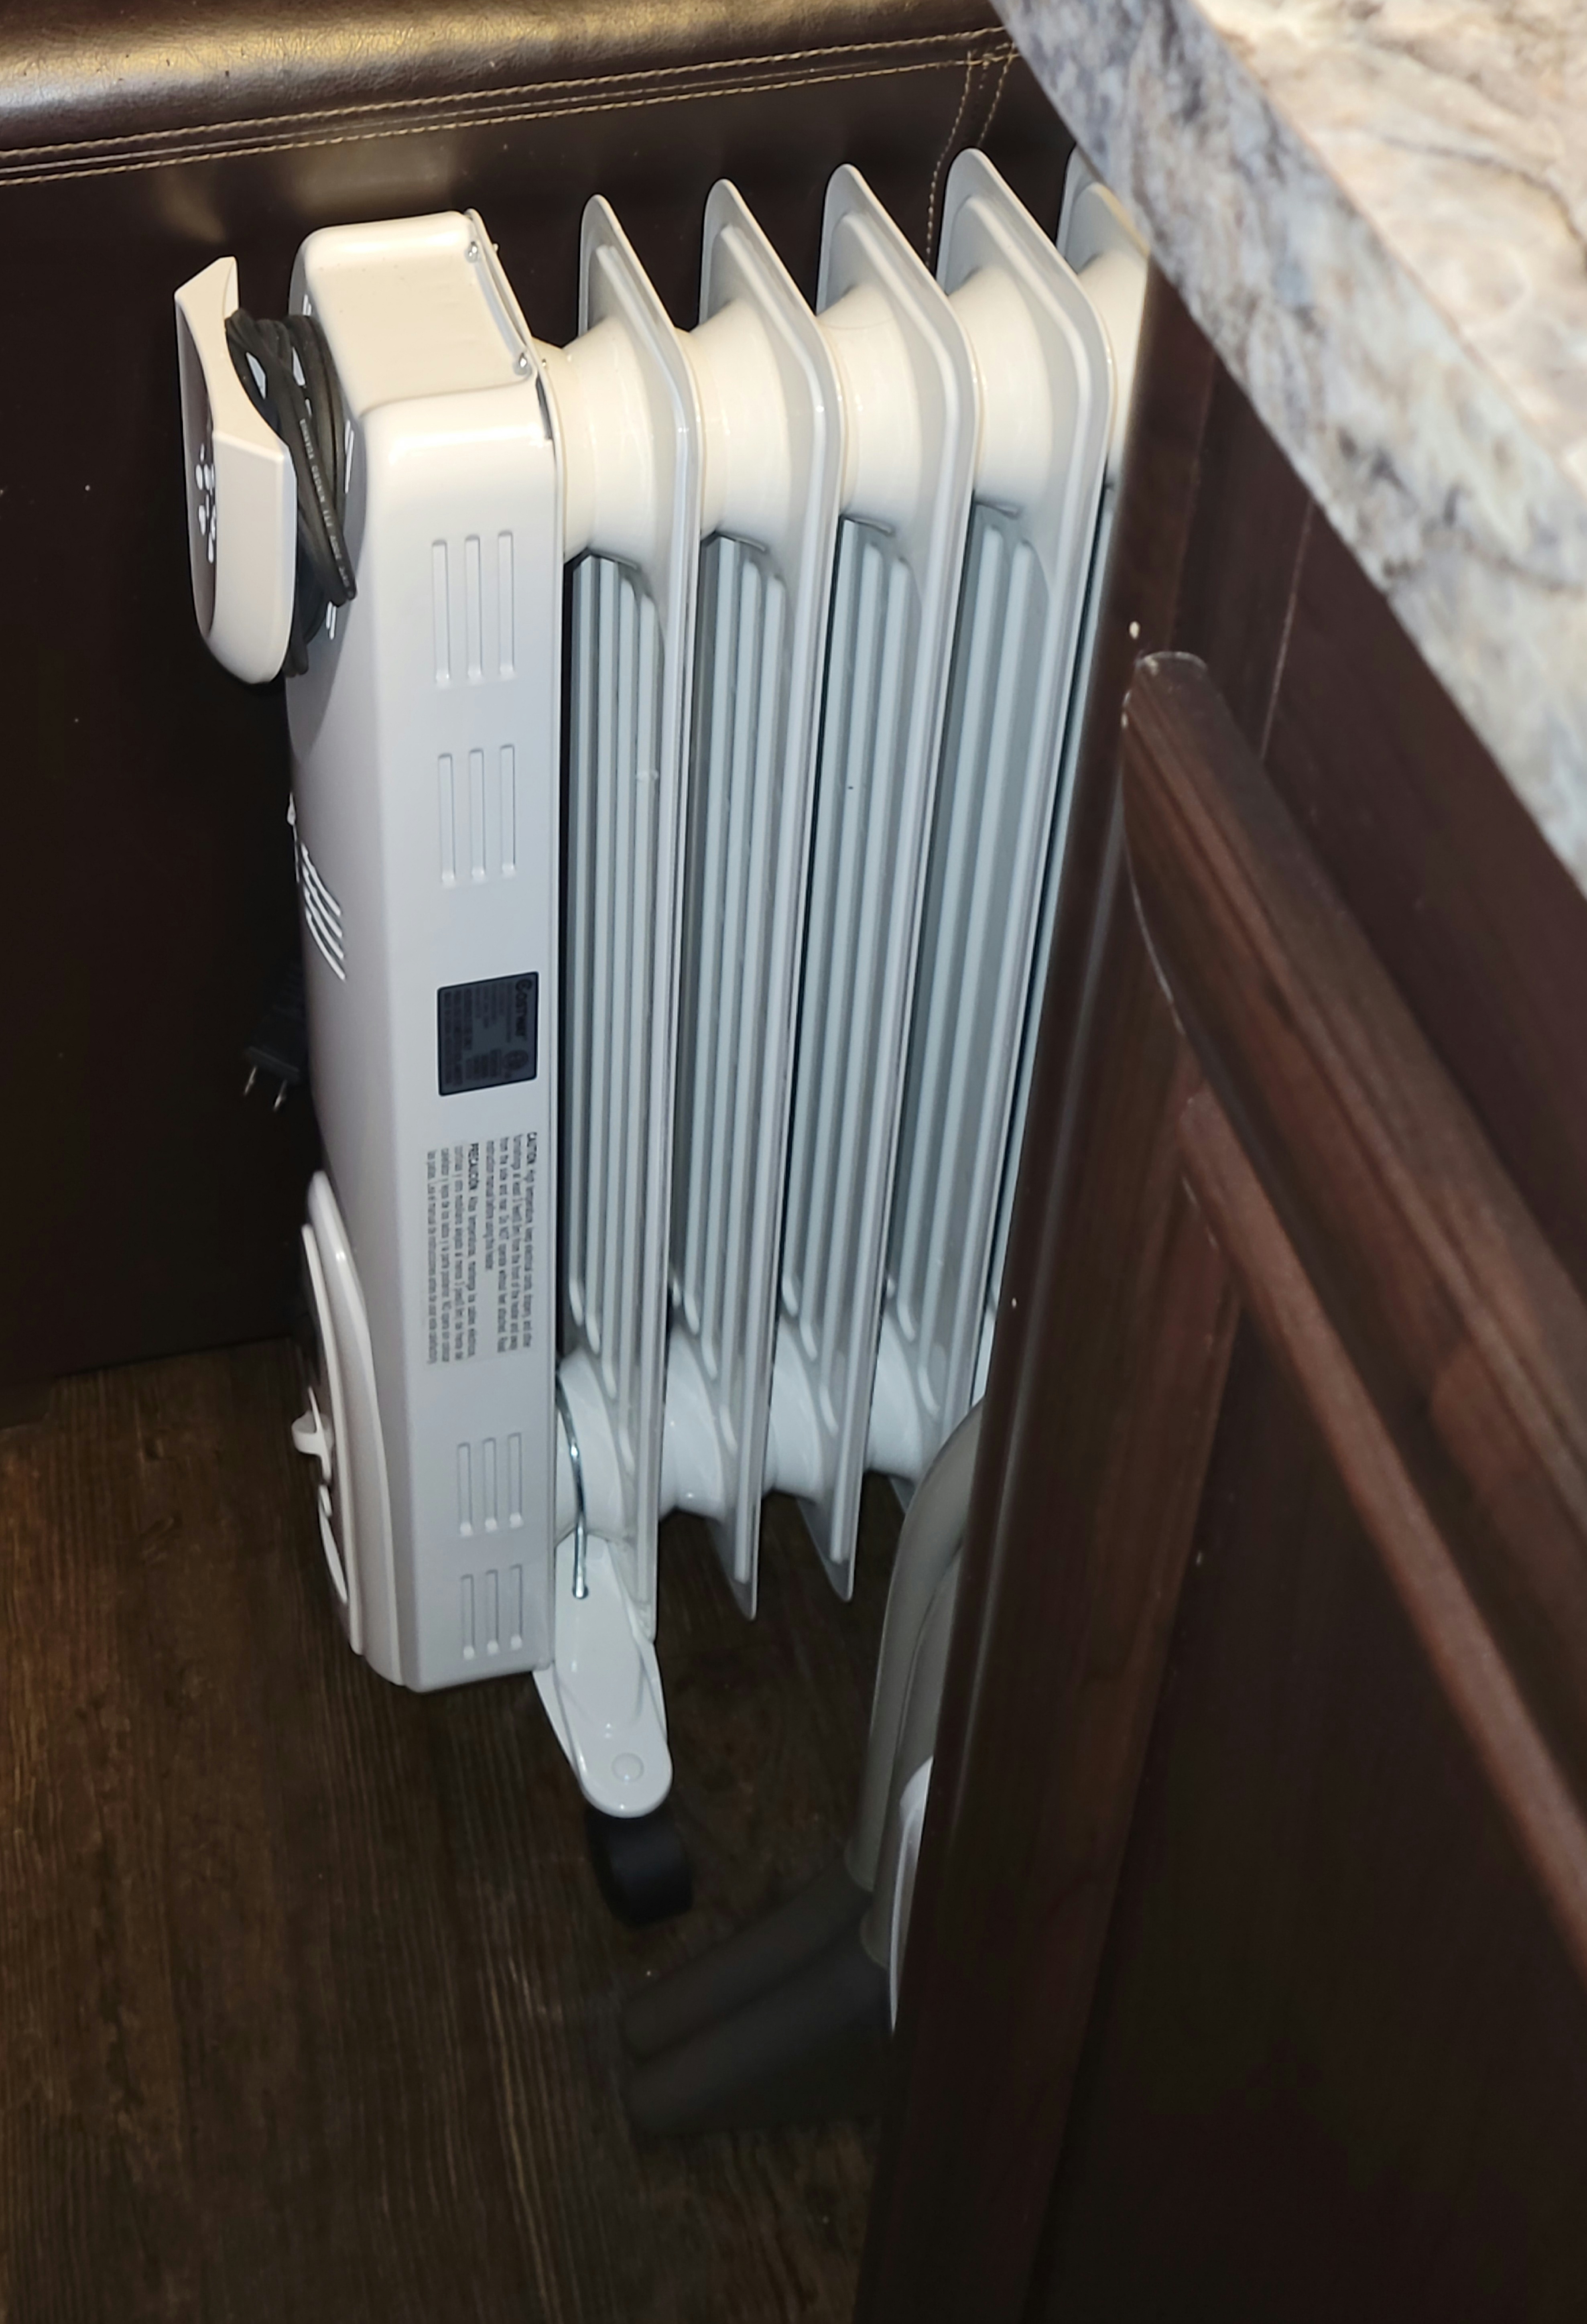 Great heater